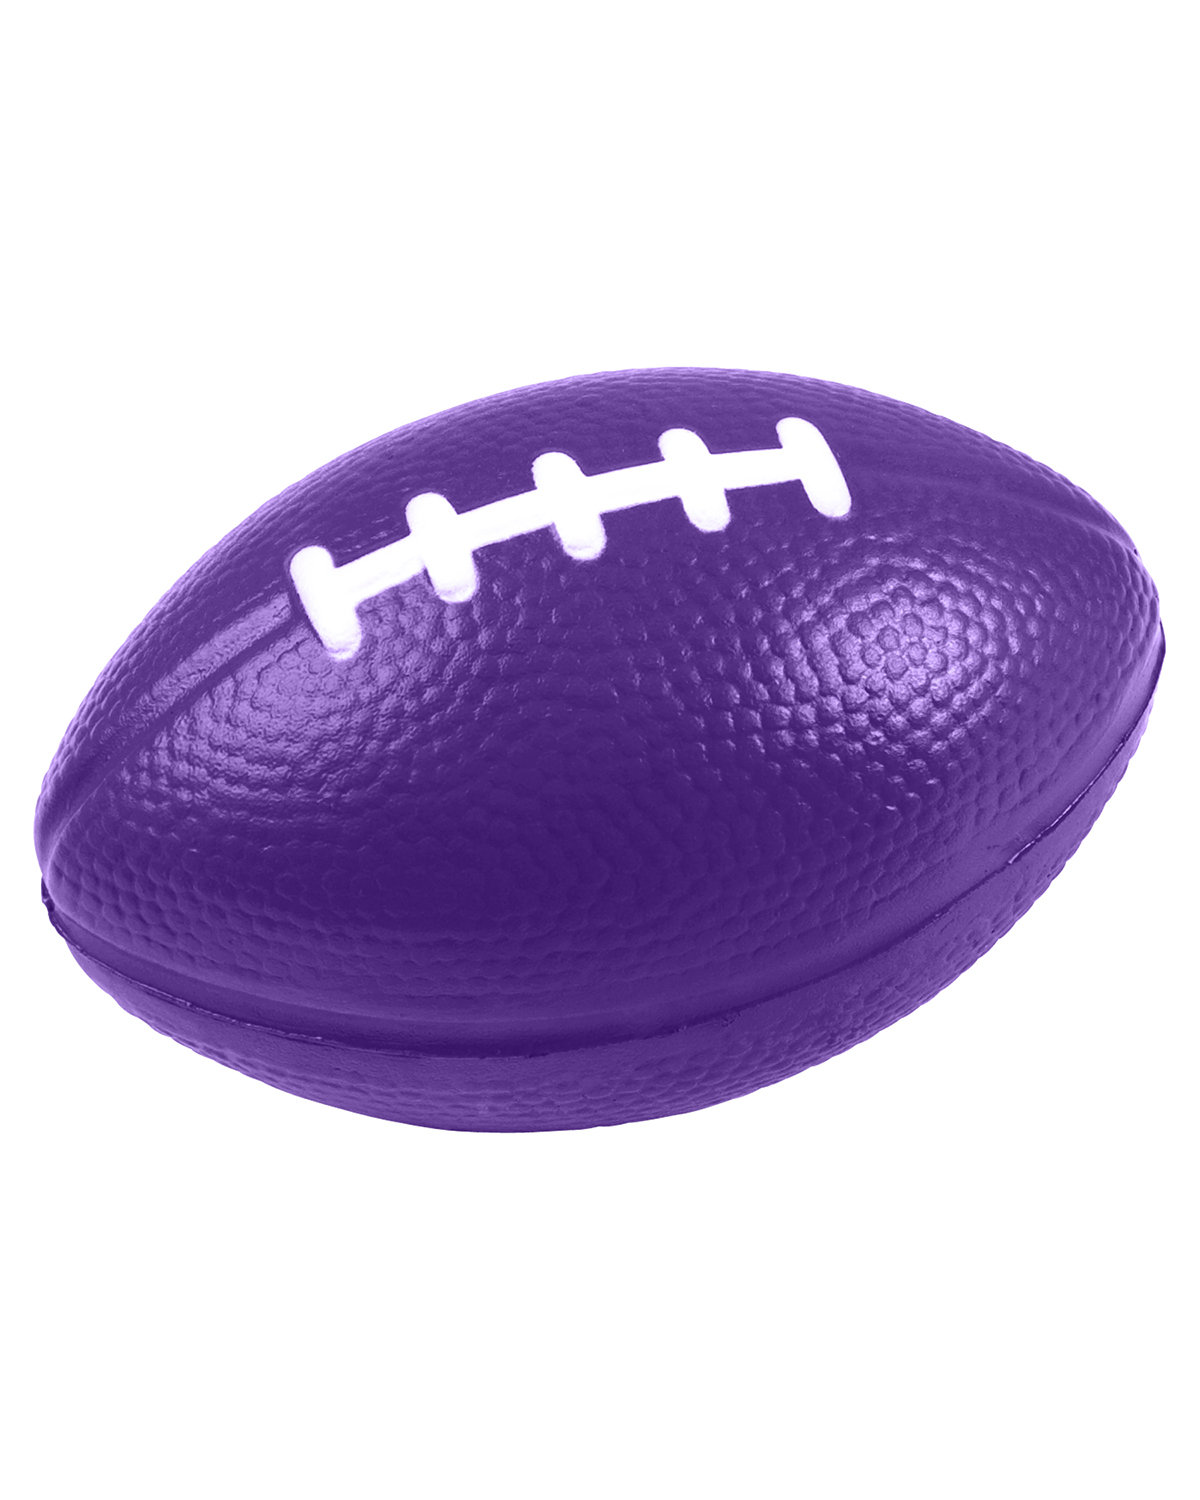 Prime Line Football Stress Reliever 3" purple 